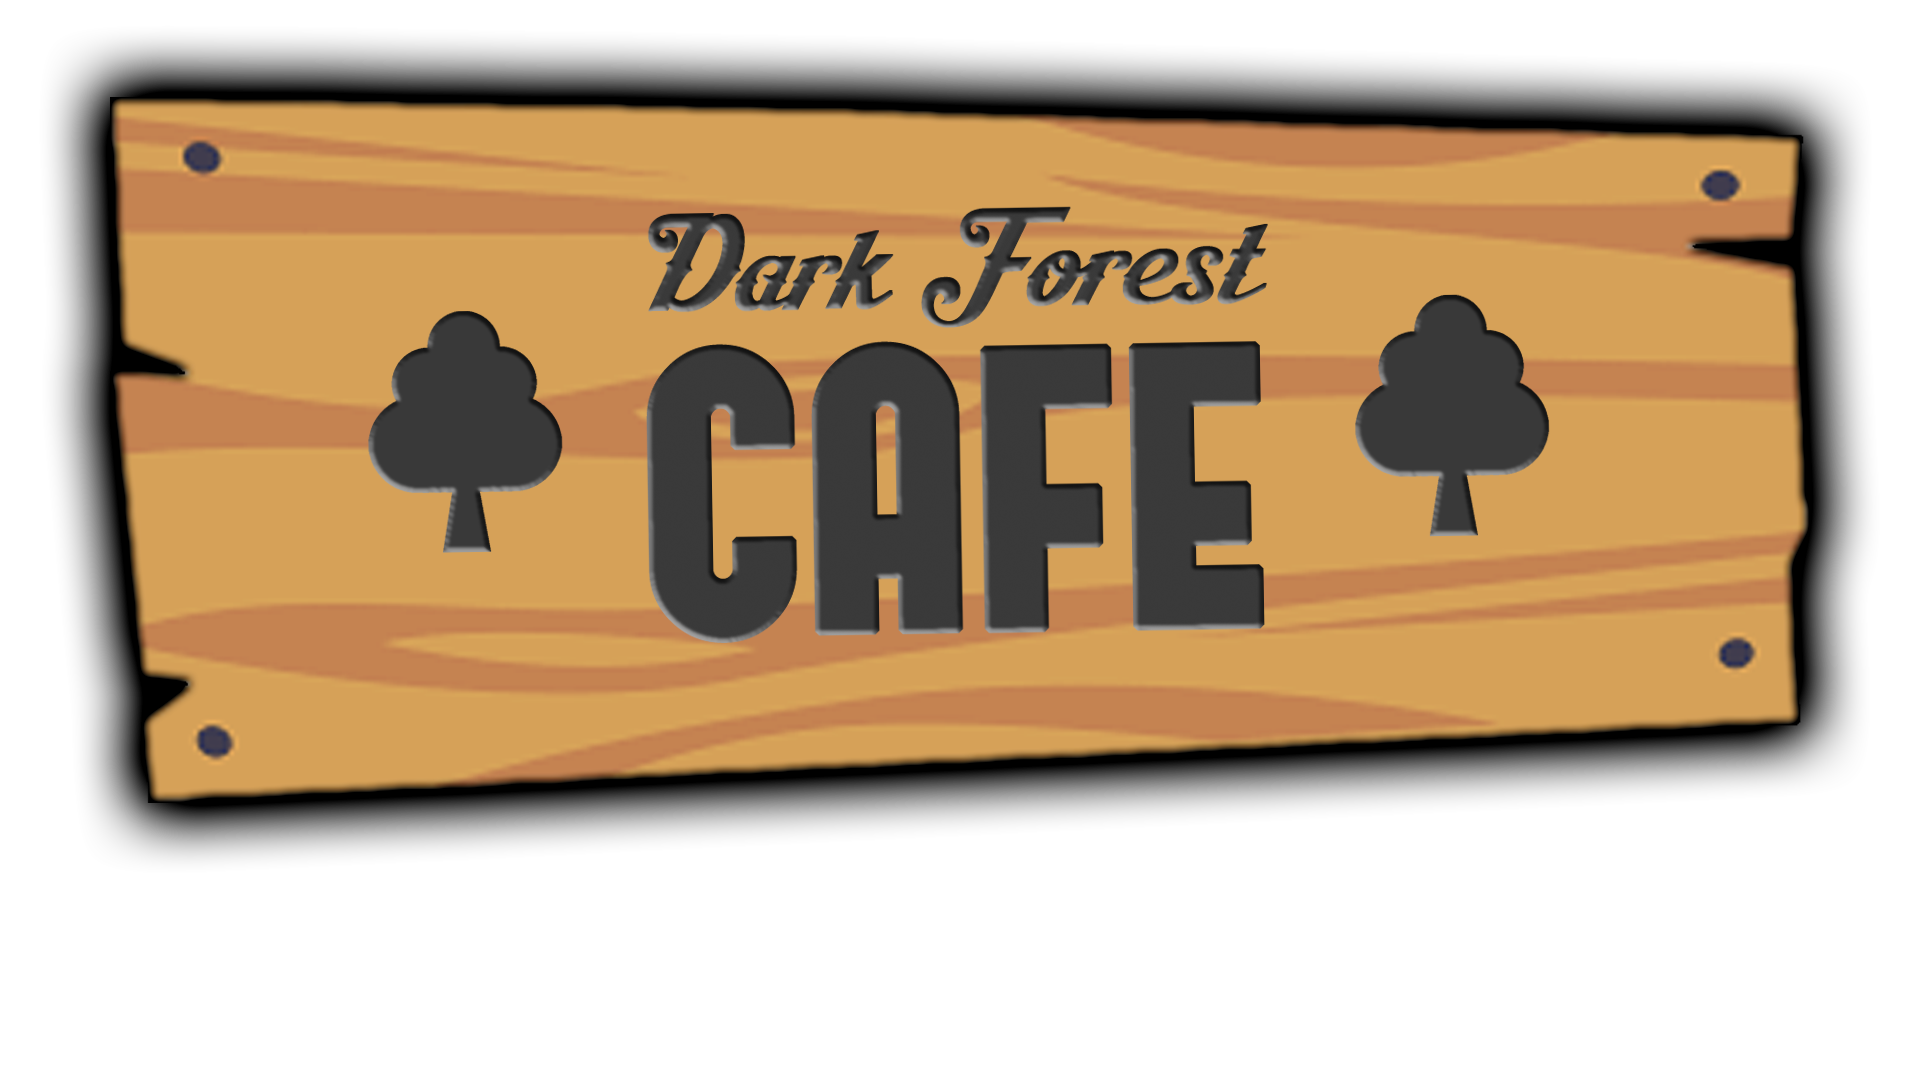 Dark Forest Café